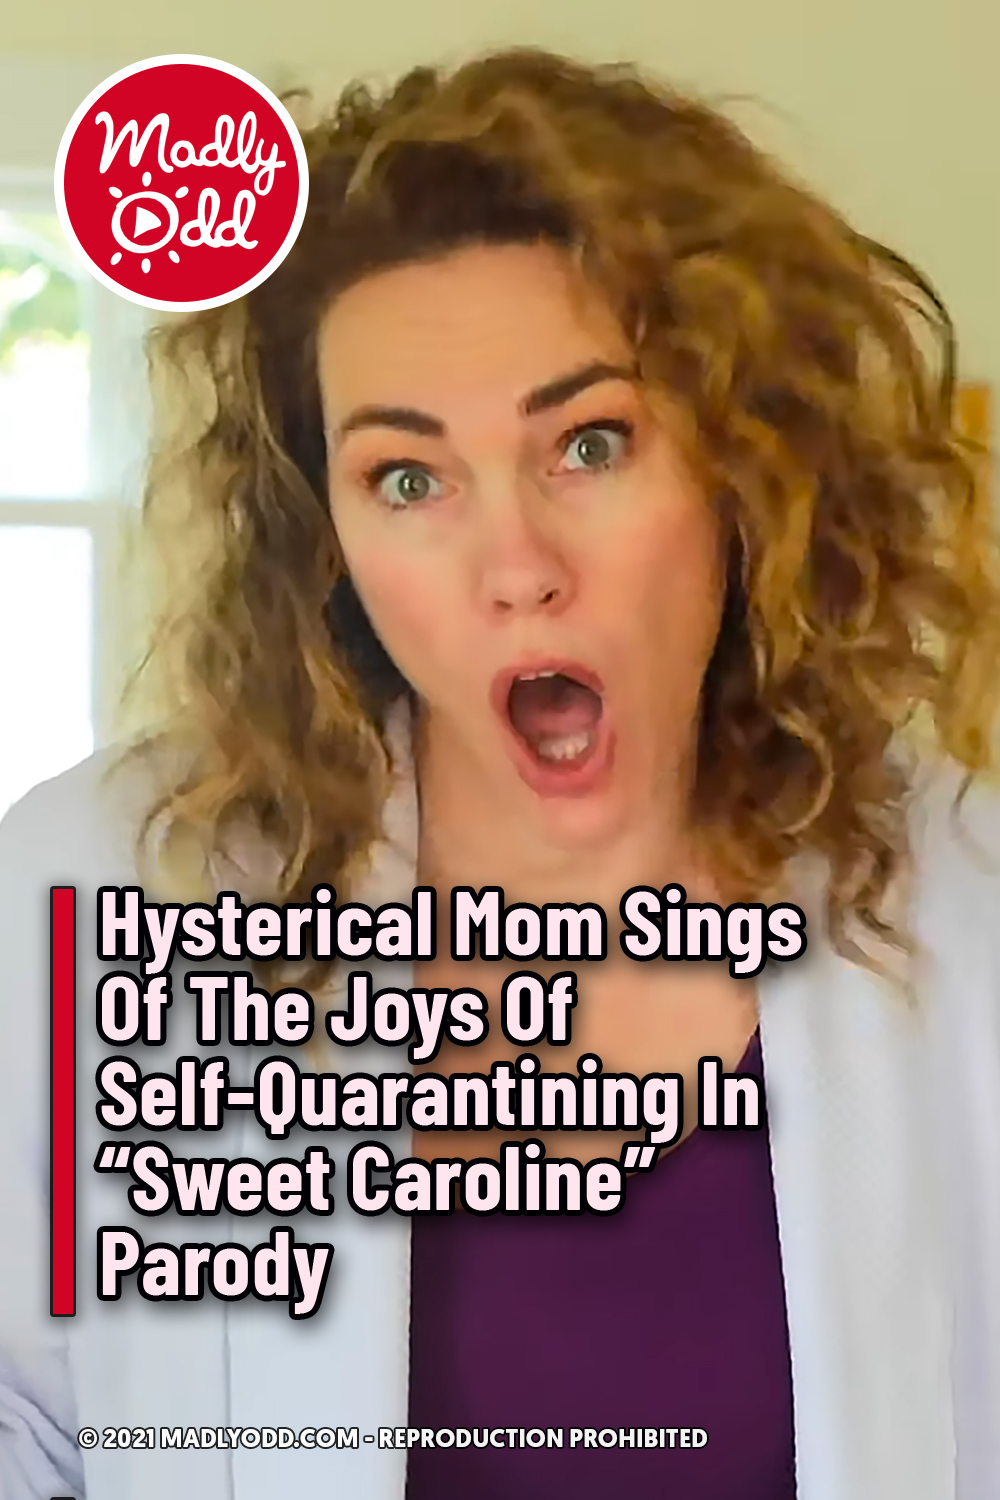 Hysterical Mom Sings Of The Joys Of Self-Quarantining In “Sweet Caroline” Parody